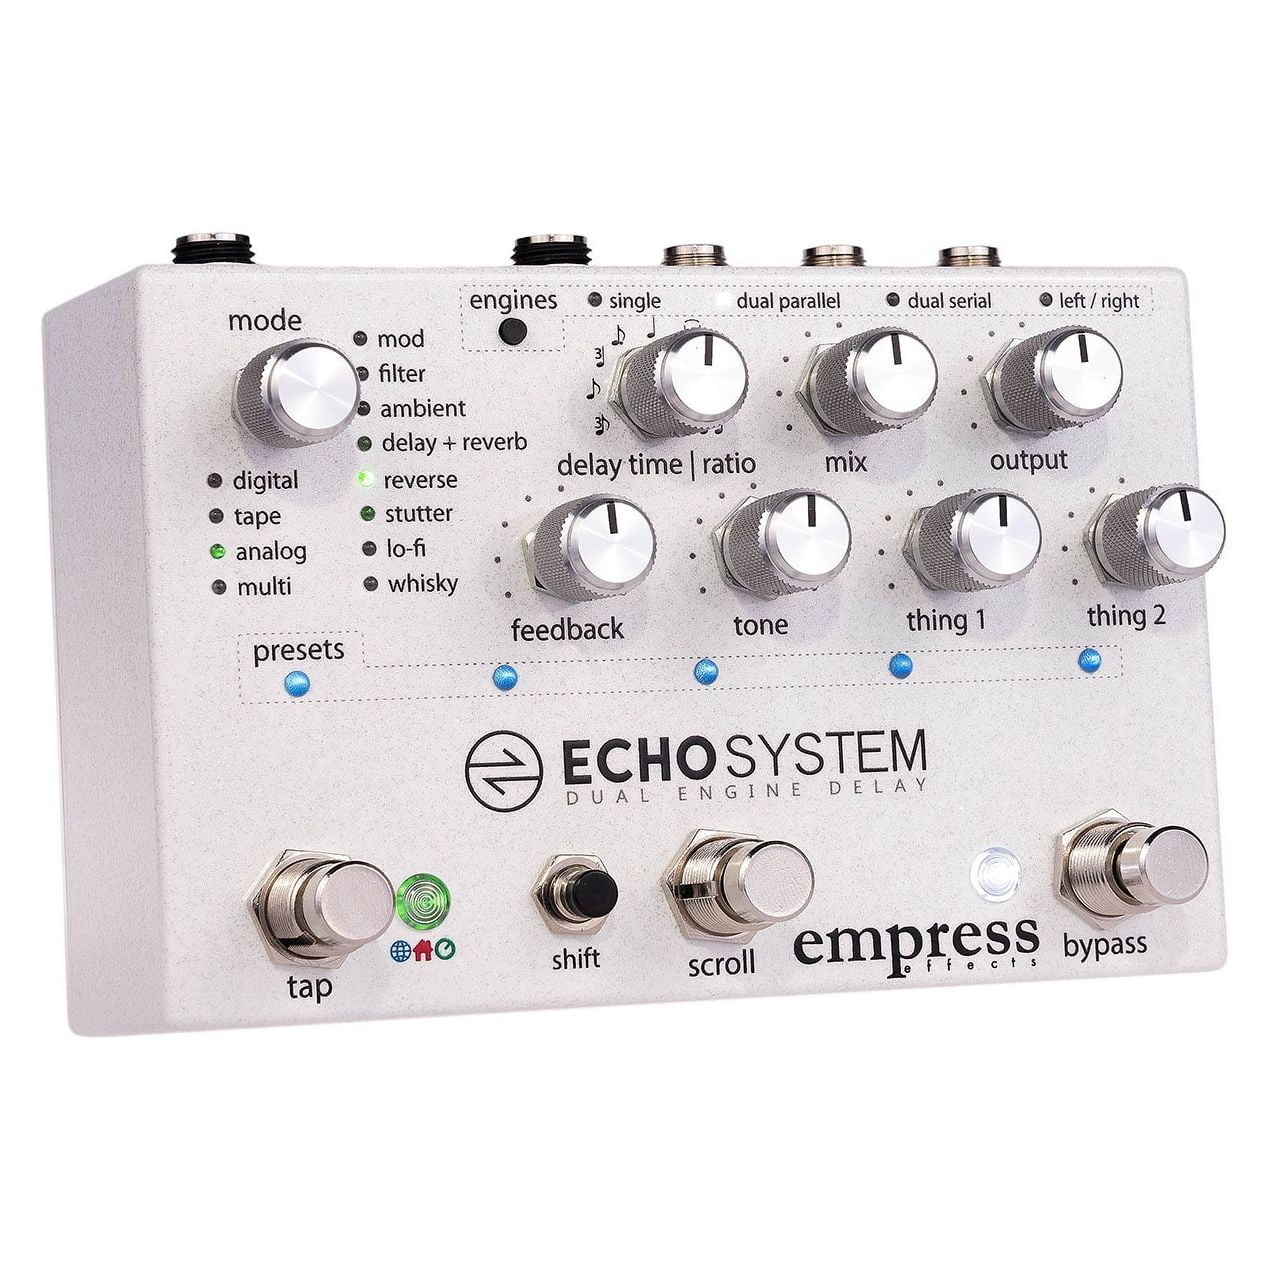 Echosystem 3 4